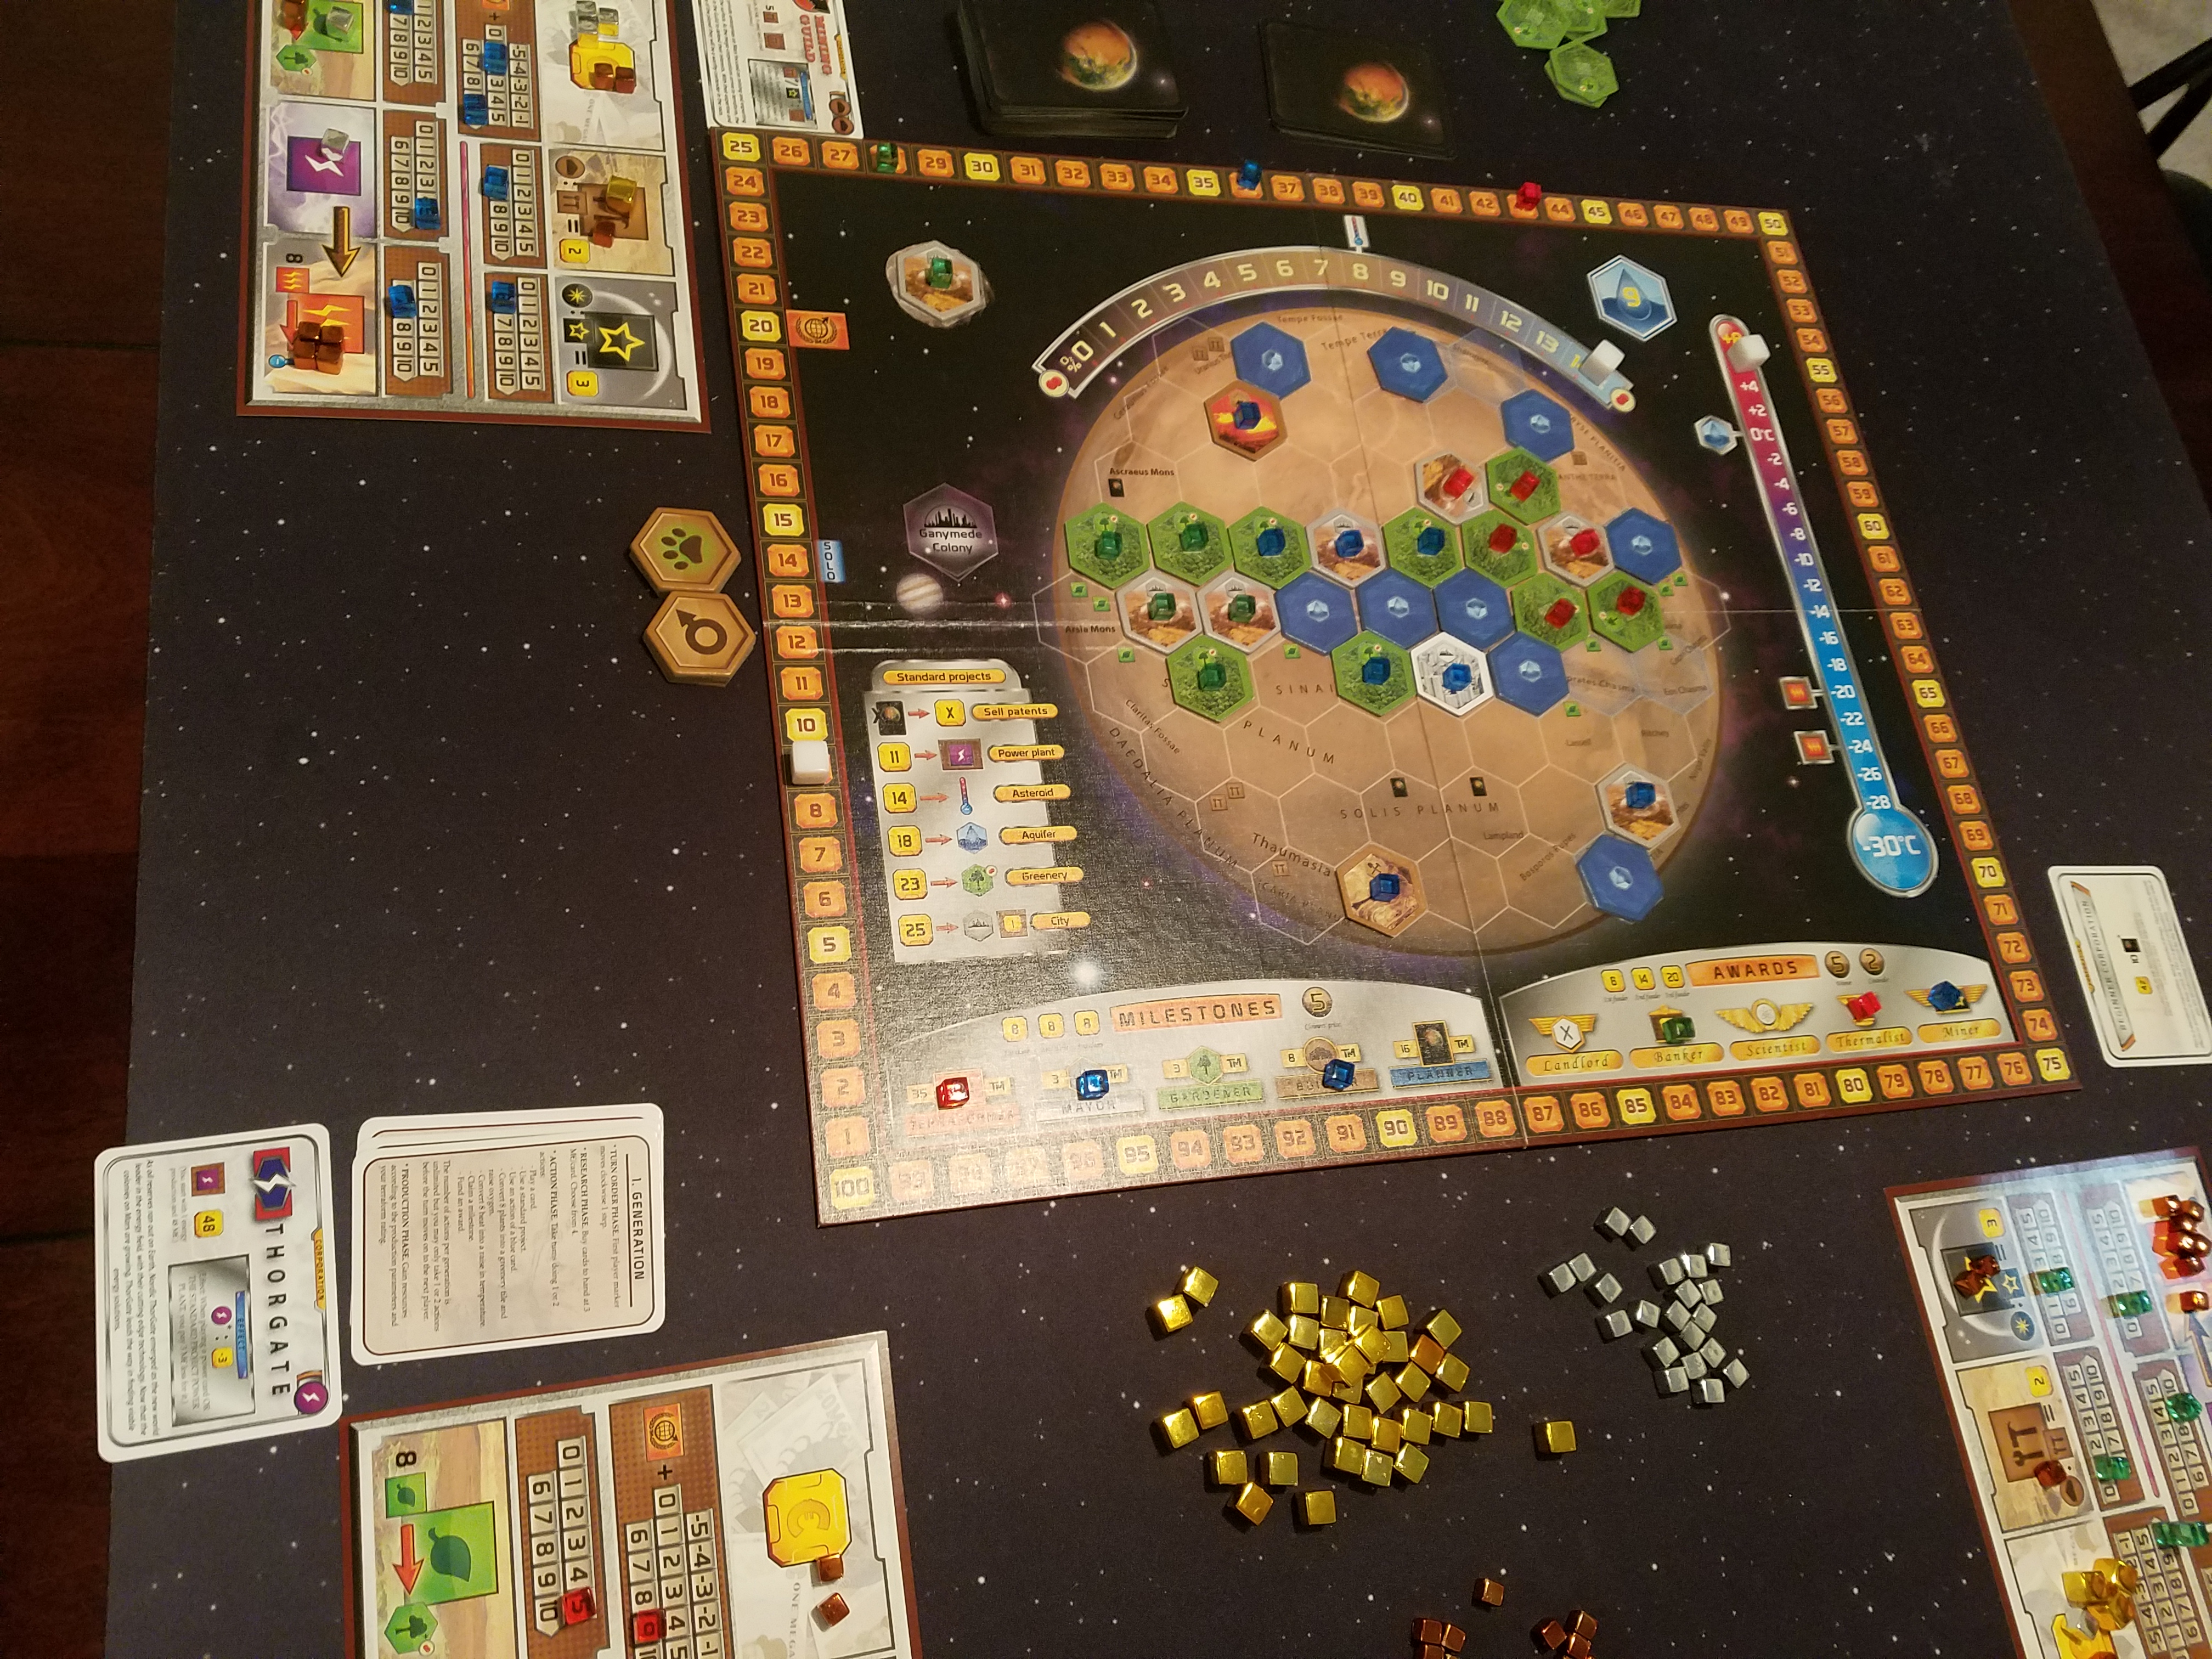 Terraforming Mars Board Game - Gamescape North